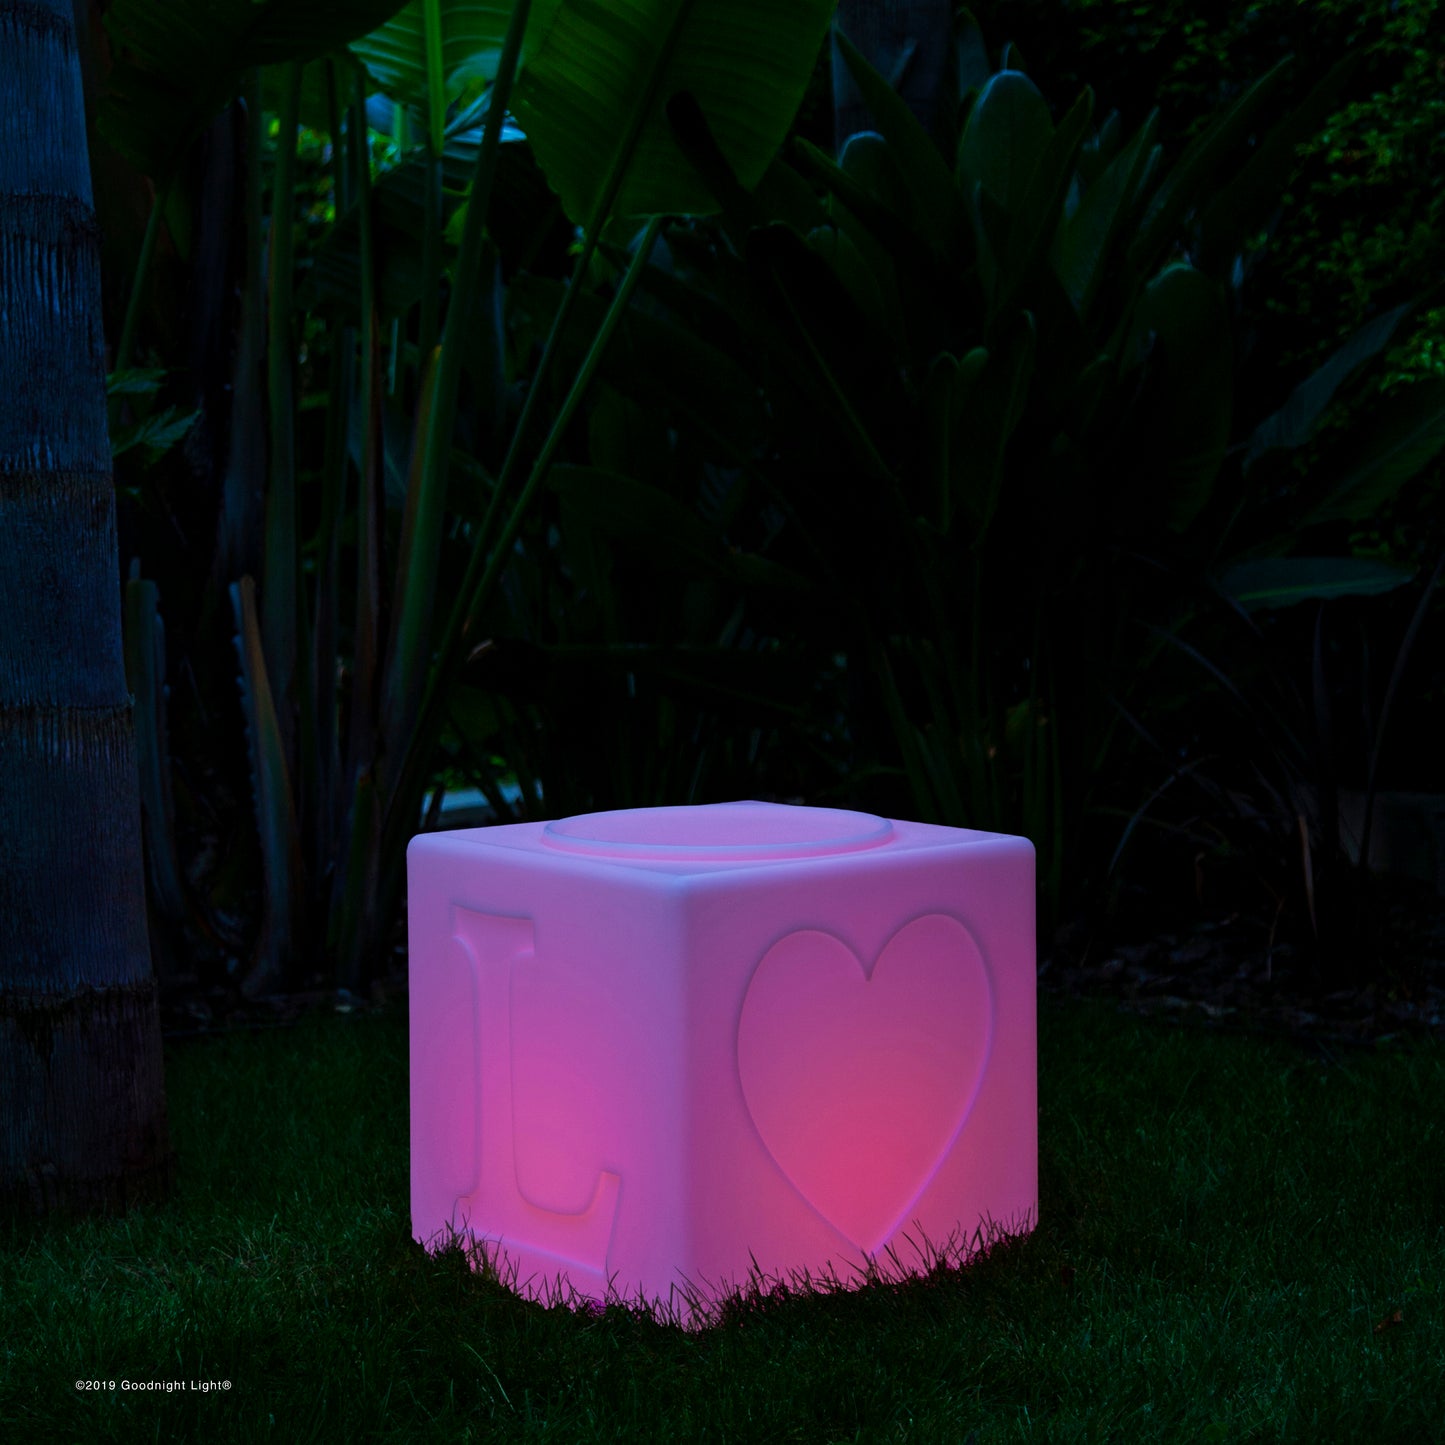 Lampe LOVE Cube "The LOVE Lamp"